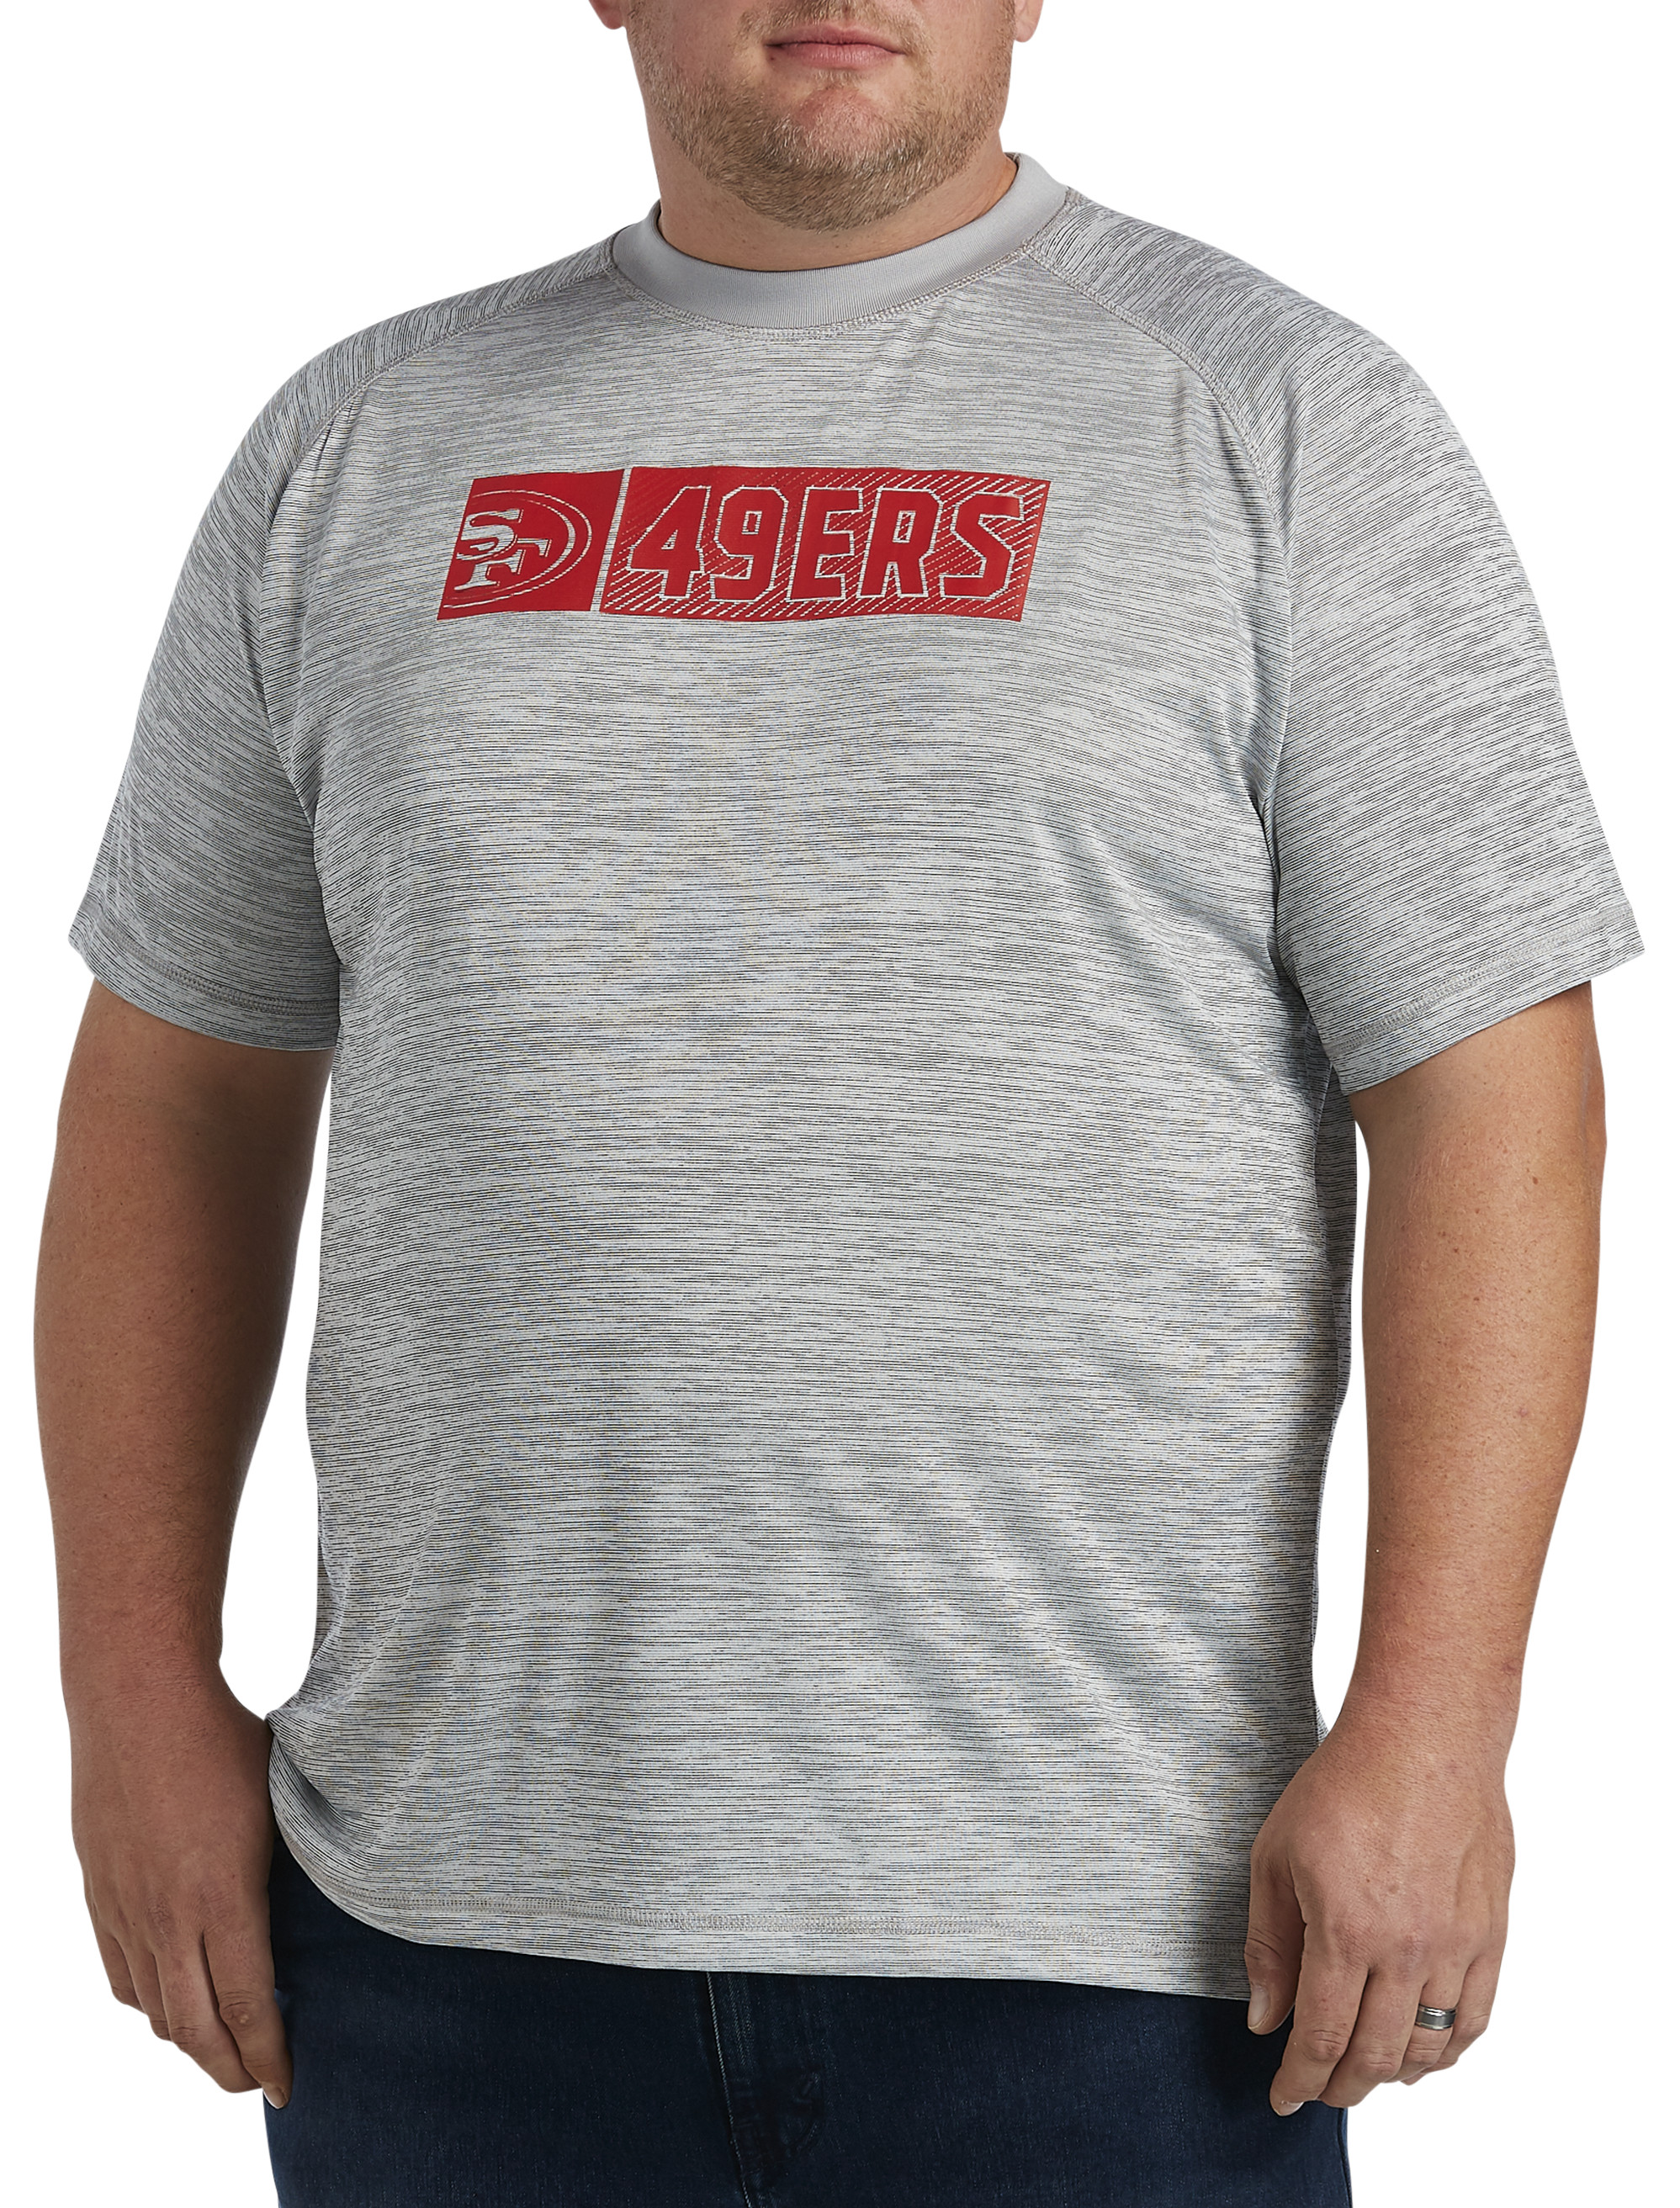 sf 49ers clothing